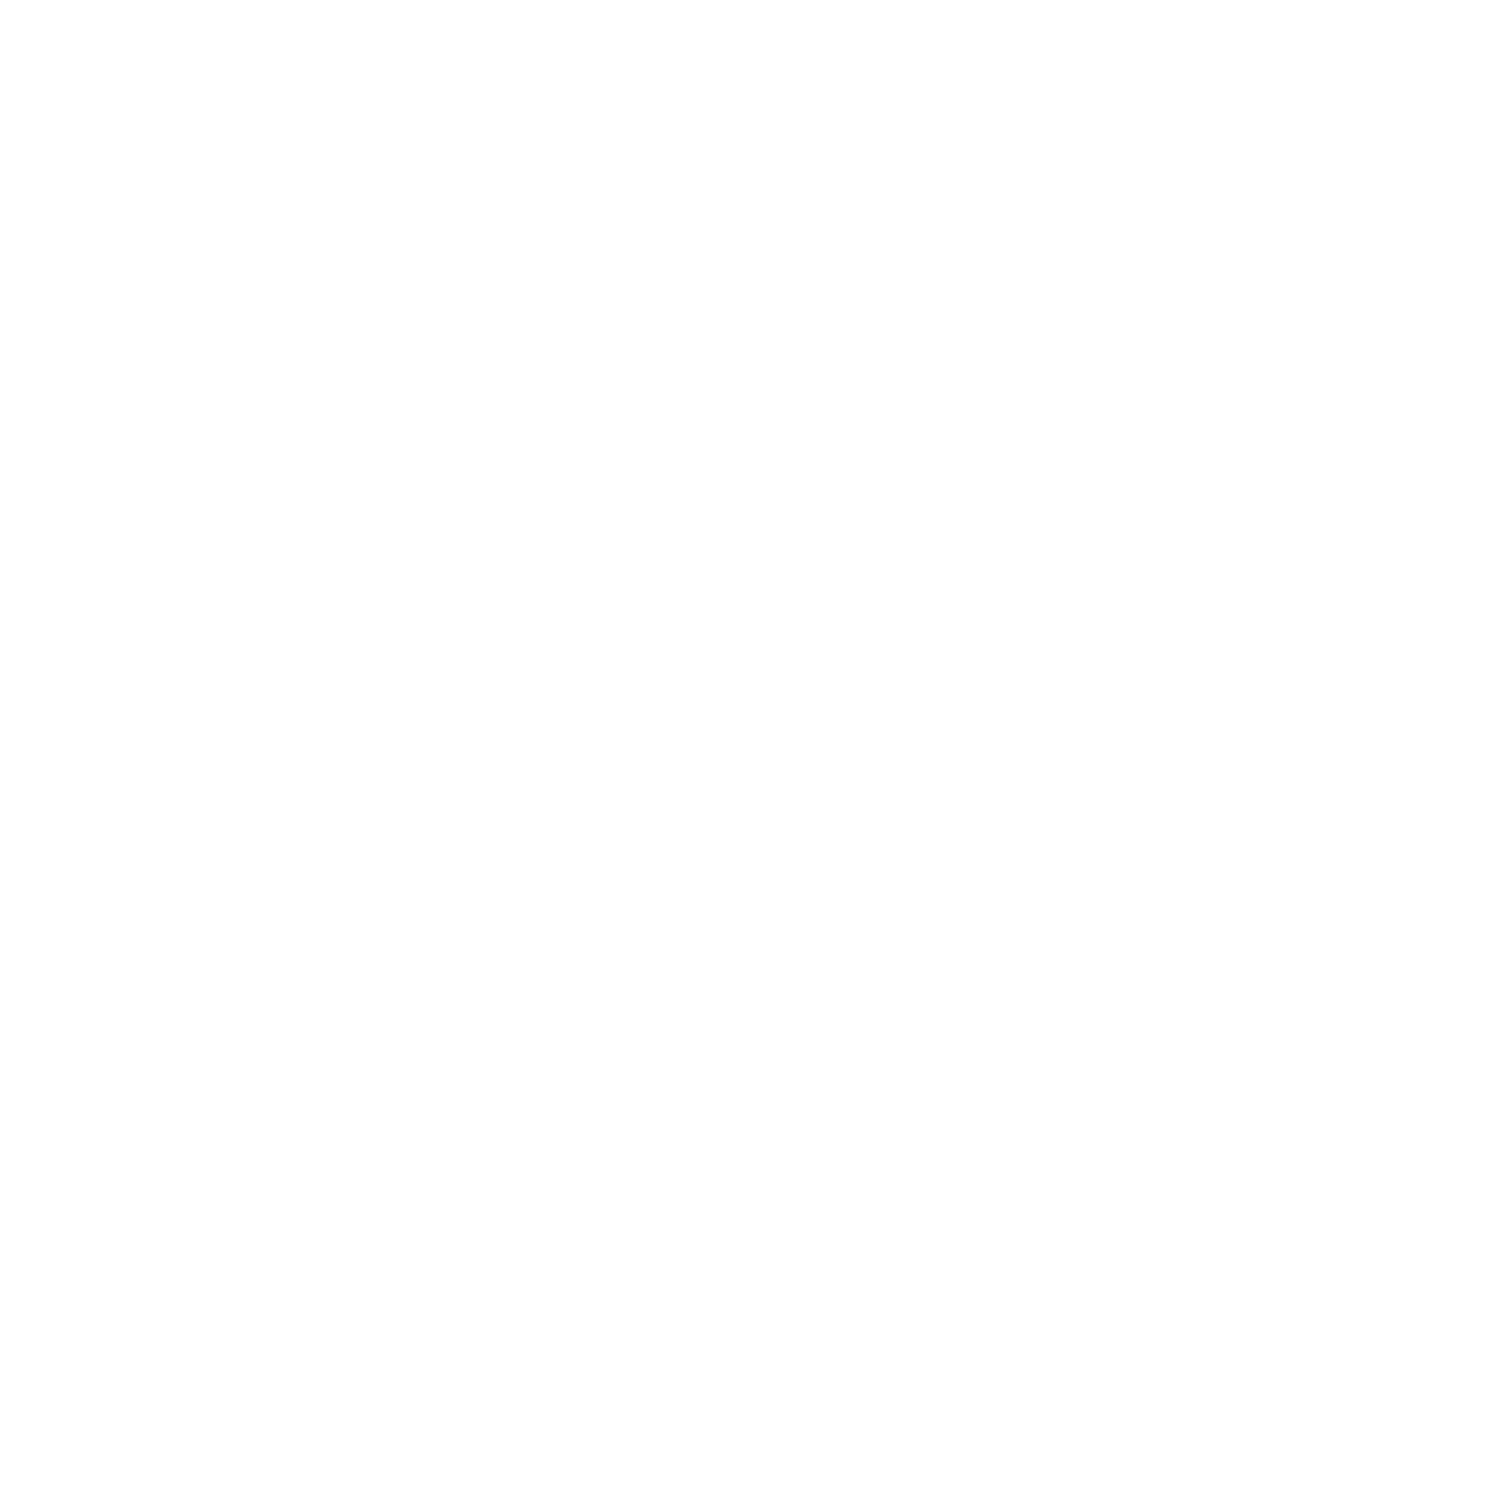 Deck Night